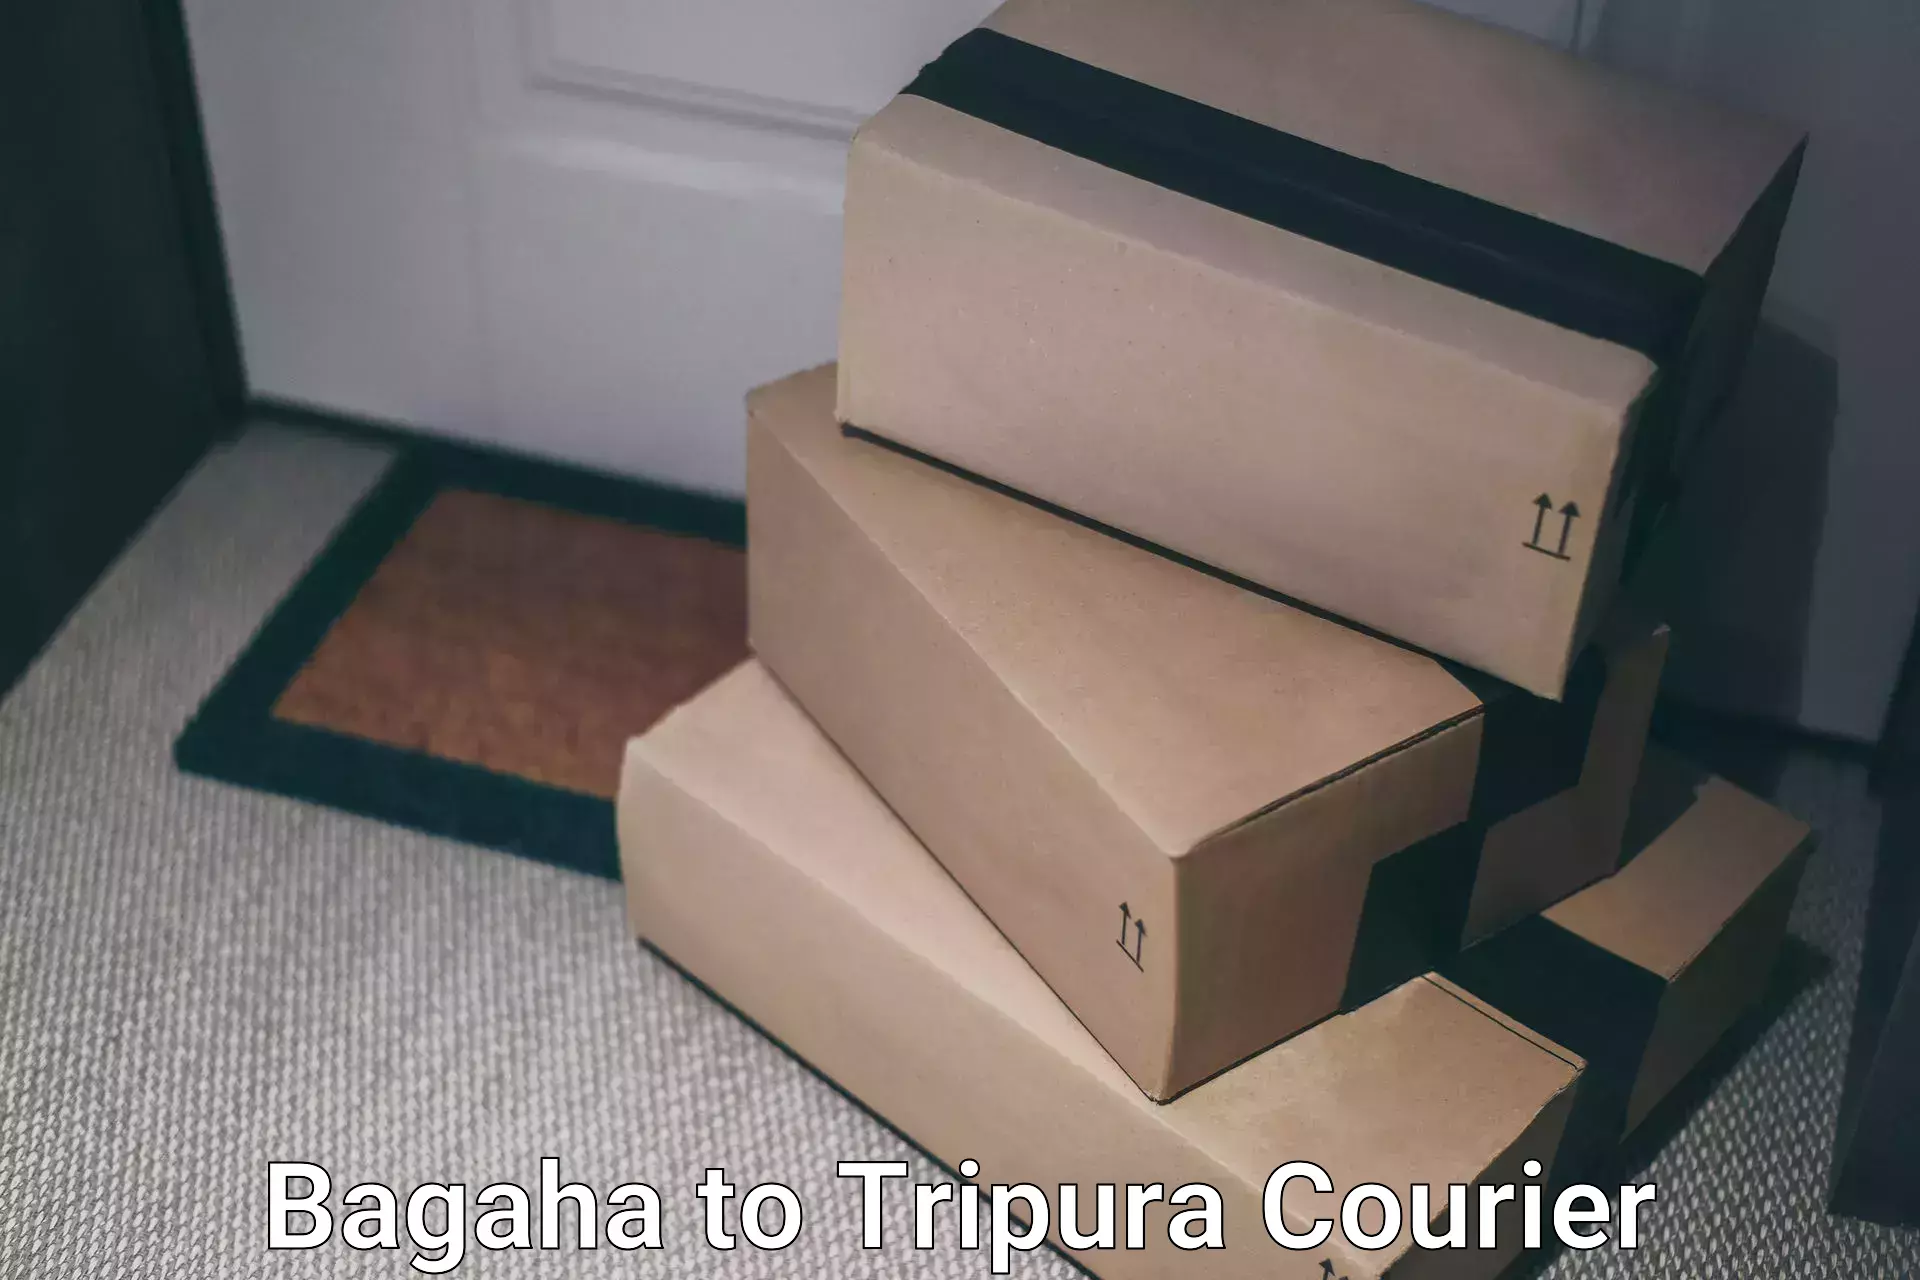 Tracking updates in Bagaha to Tripura